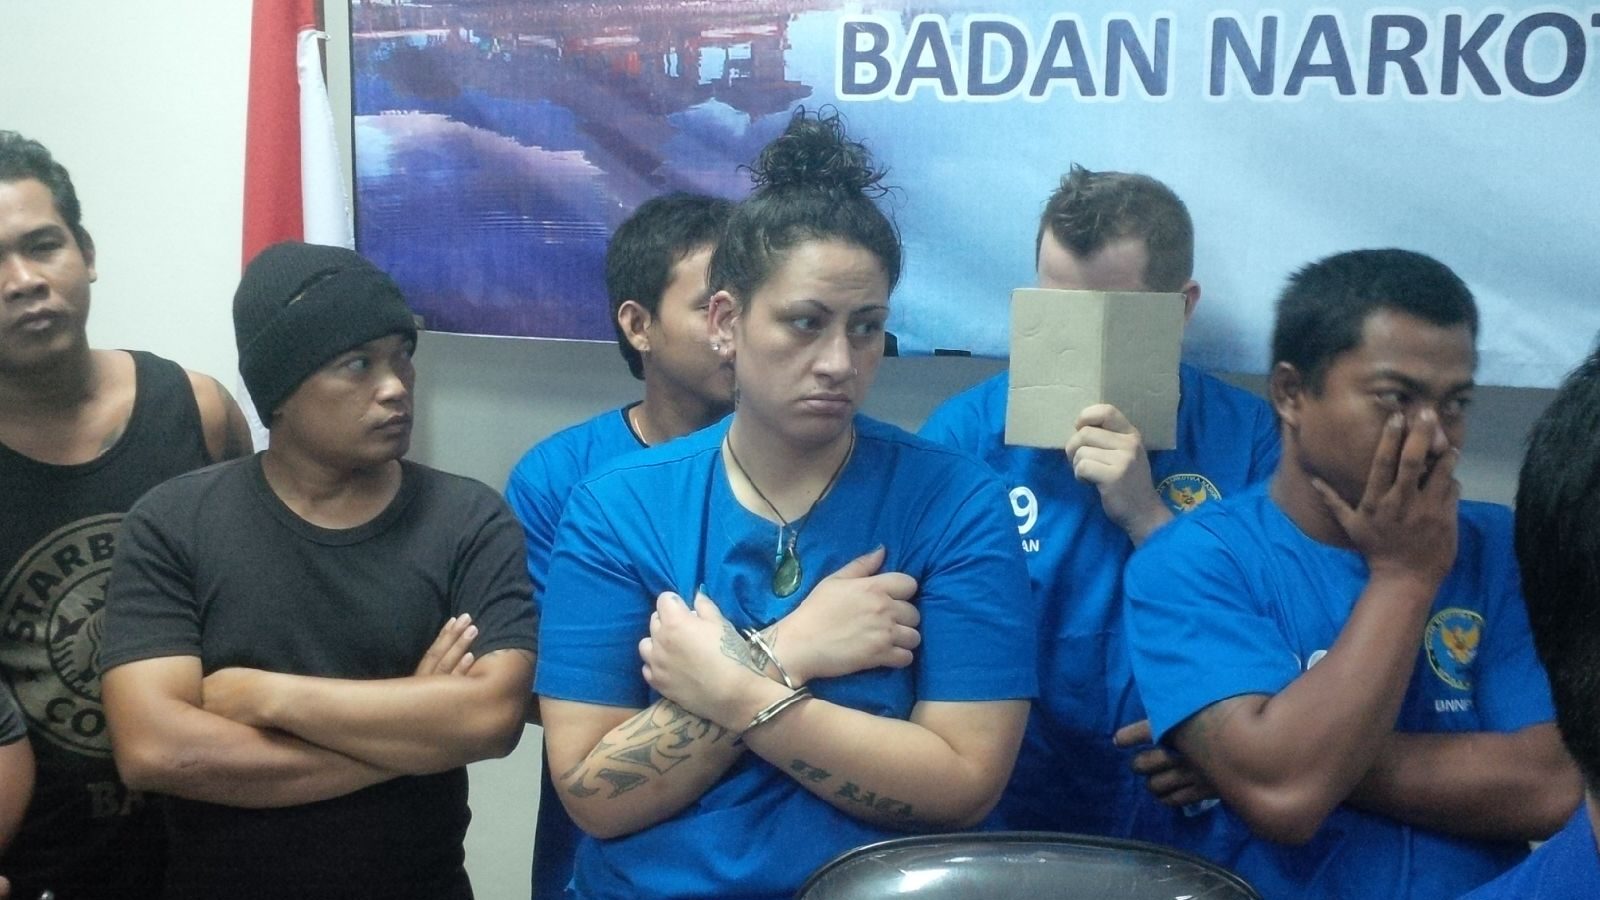 Bawa sabu, warga negara Selandia Baru ditangkap di bandara Bali